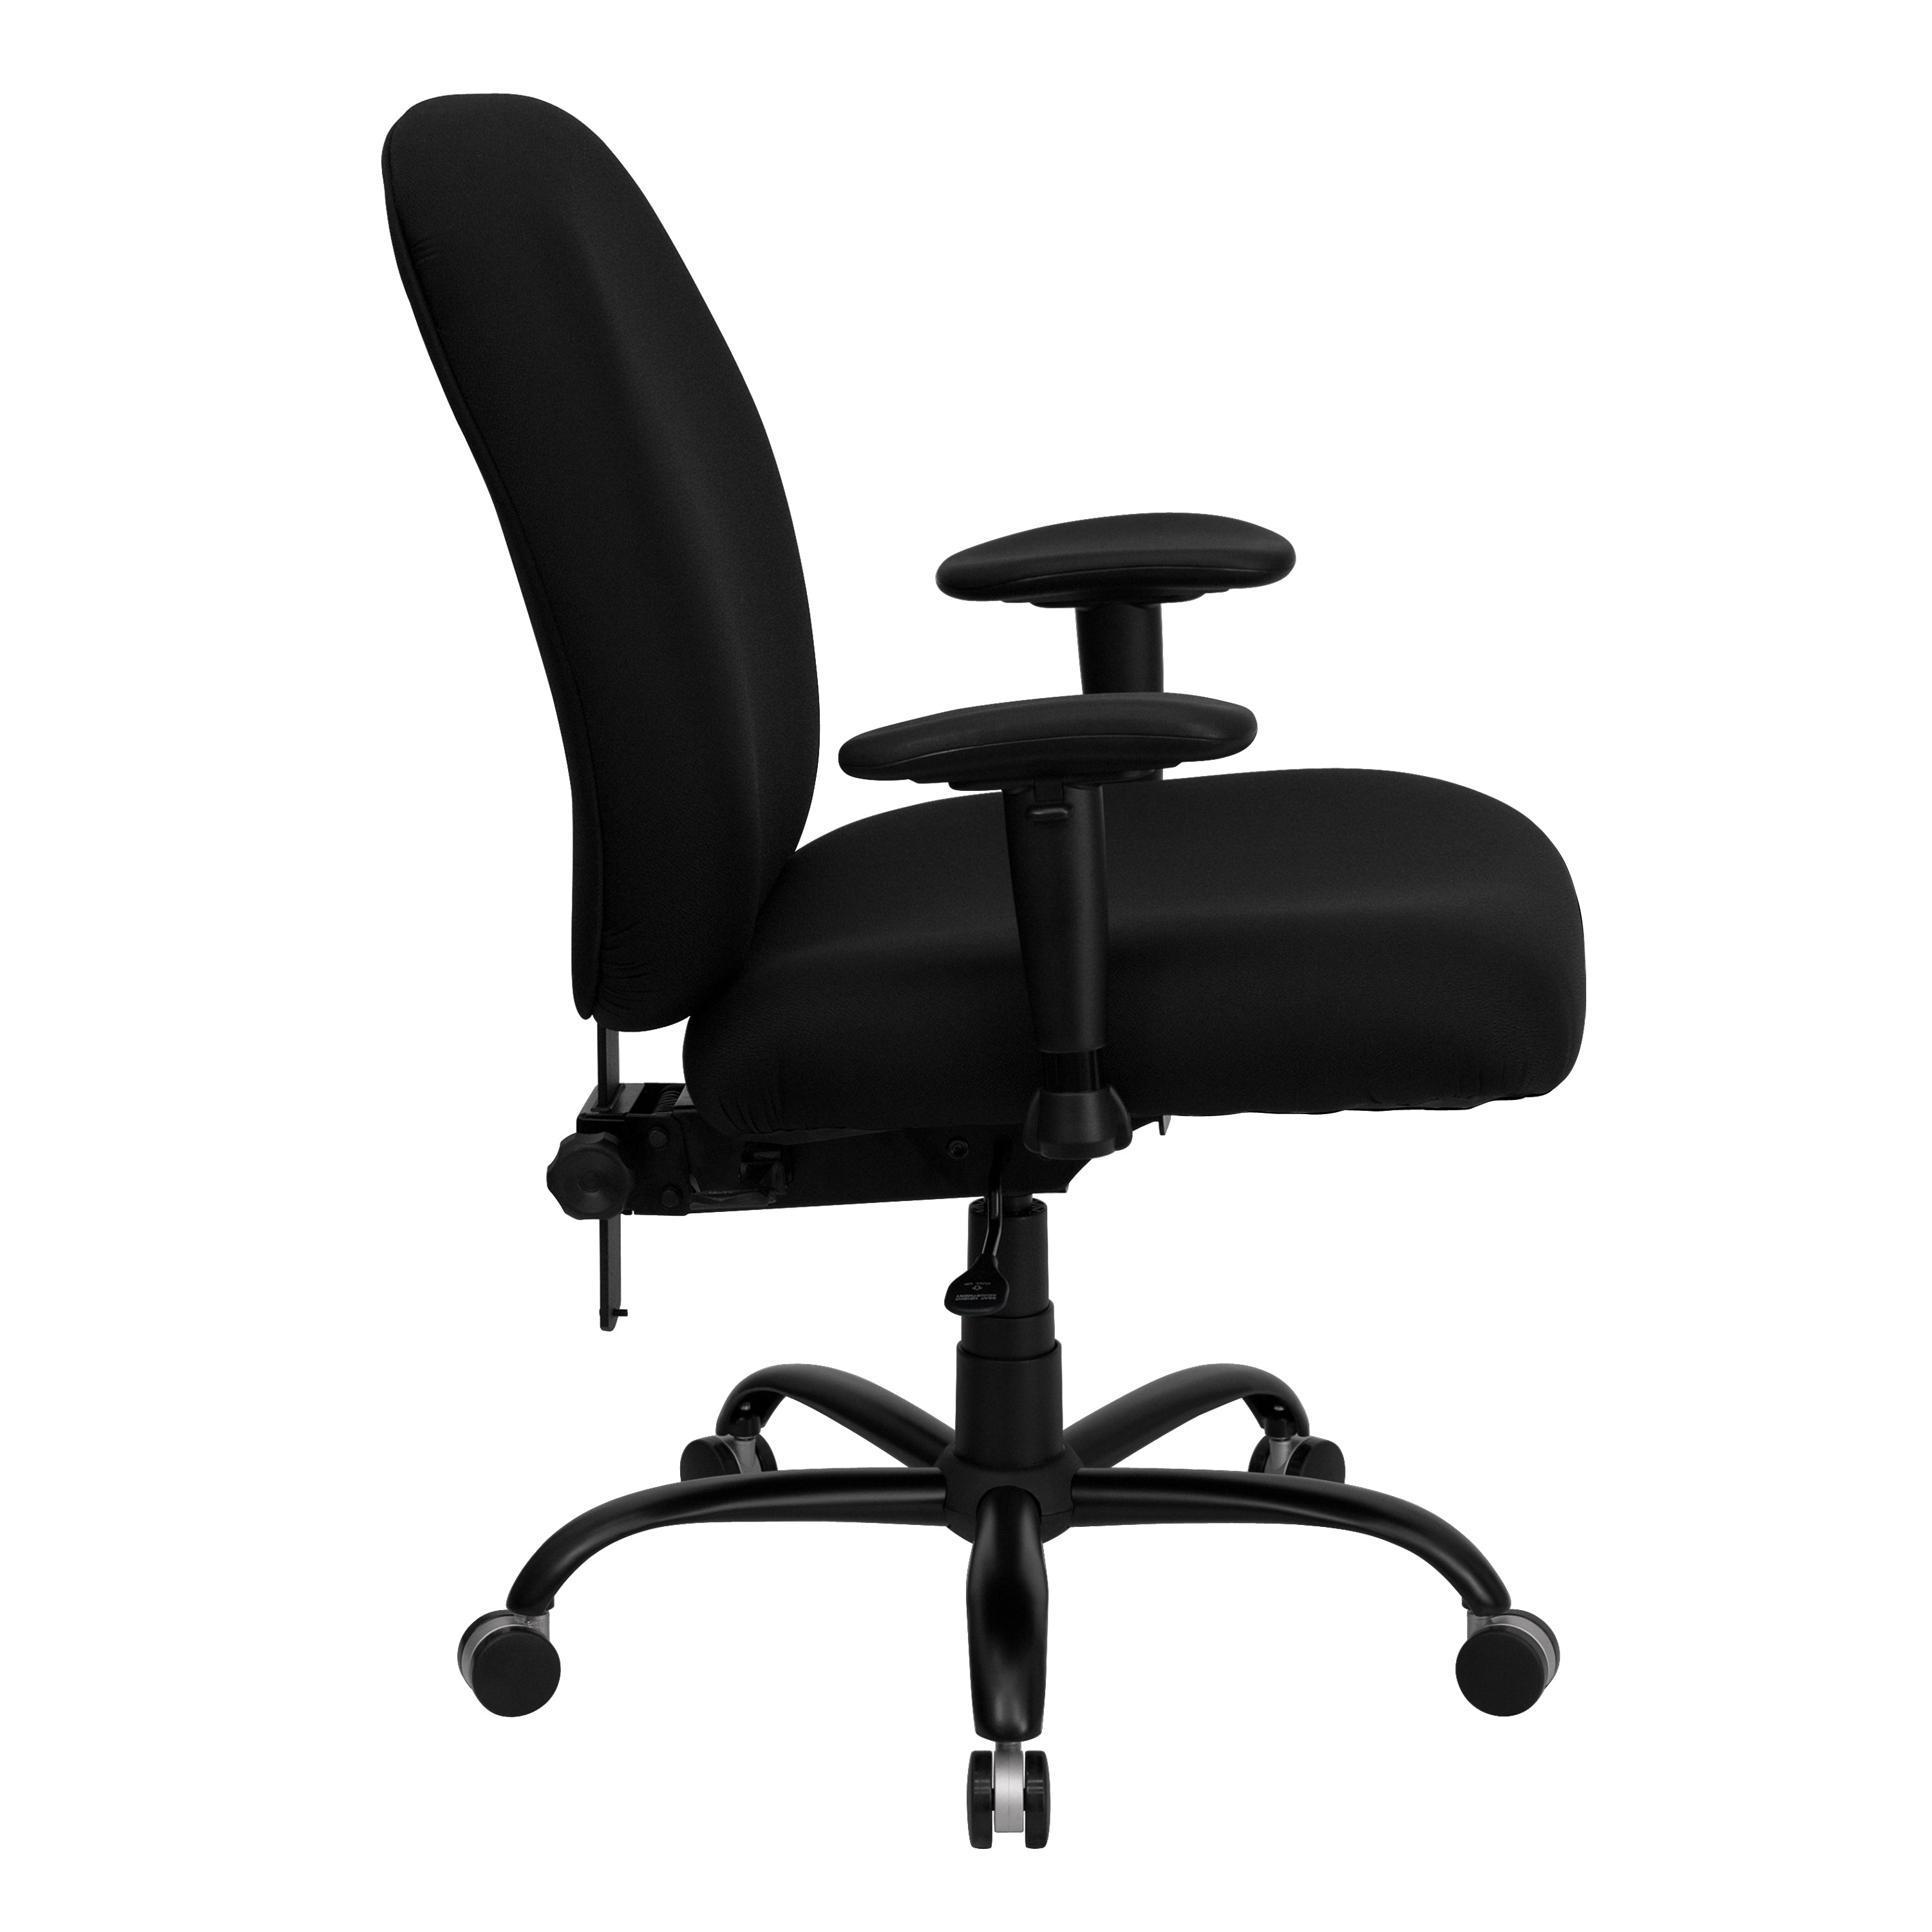 HERCULES Series Big & Tall 400 lb. Rated Fabric Executive Swivel Ergonomic Office Chair with Adjustable Back Height and Arms-Big & Tall Office Chair-Flash Furniture-Wall2Wall Furnishings